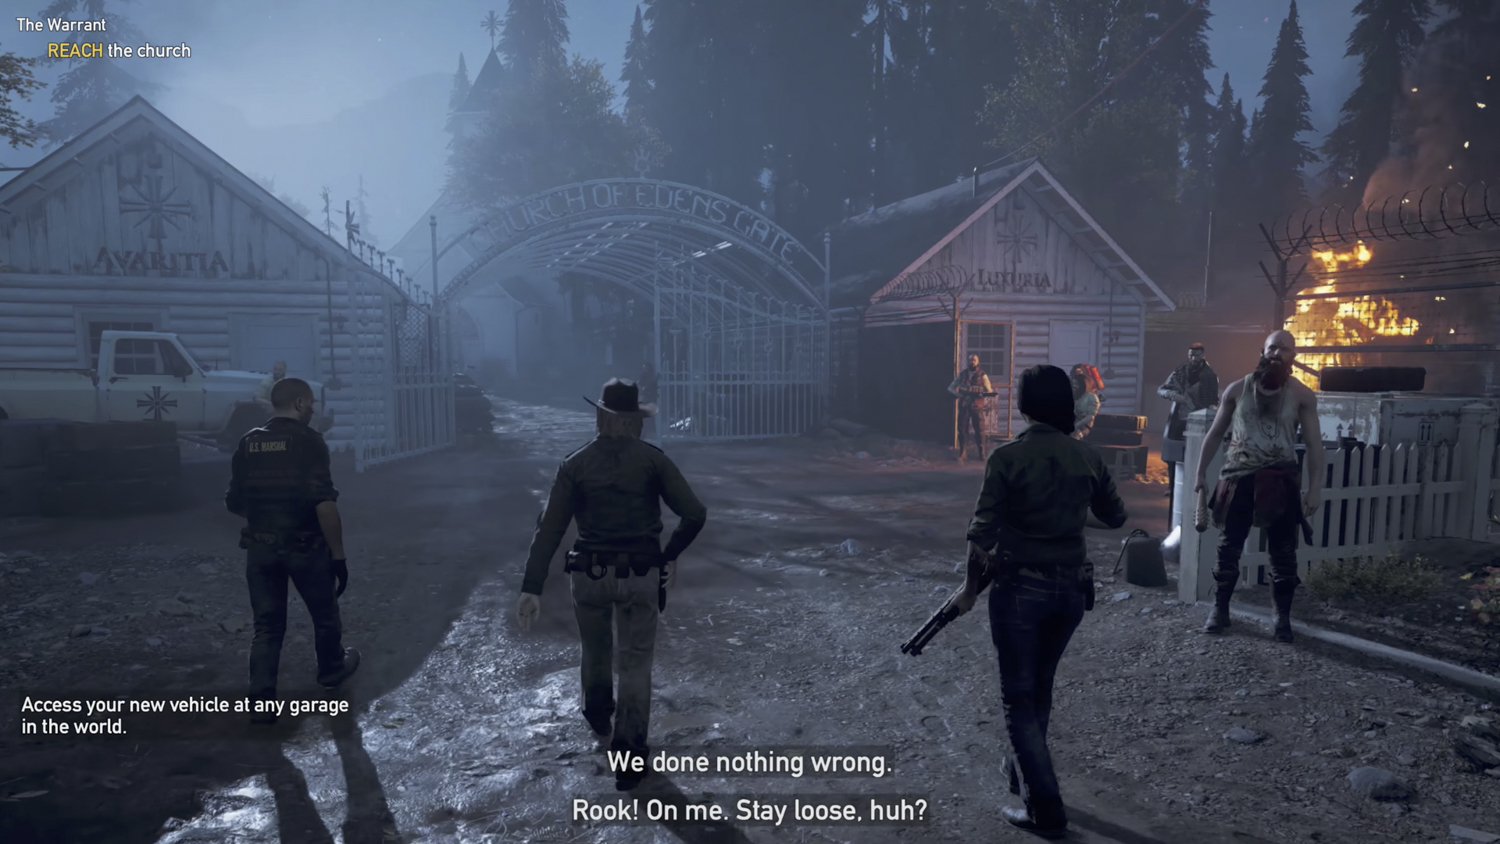 Far Cry 5 - Wertungsspiegel: Tests, Metacritic-Wertung, Steam-Reviews